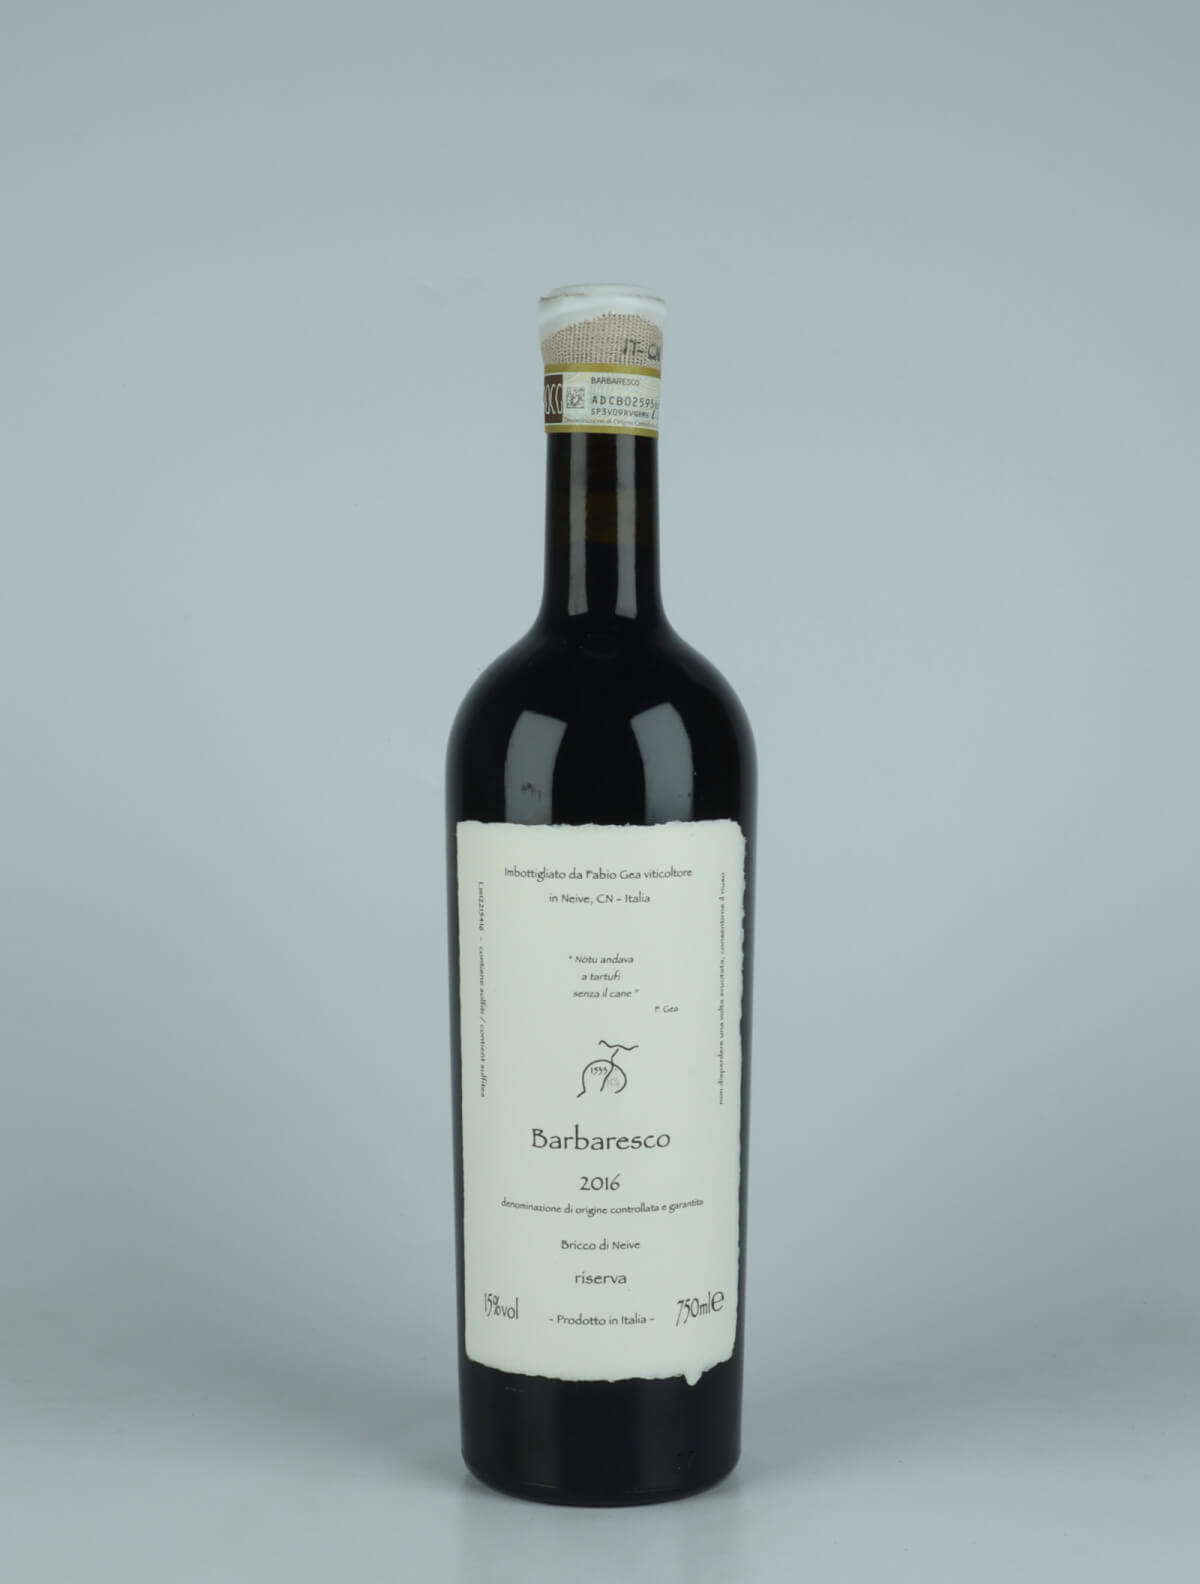 A bottle 2016 Barbaresco Riserva (Nòtu andava a tartufi senza il cane) Red wine from Fabio Gea, Piedmont in Italy